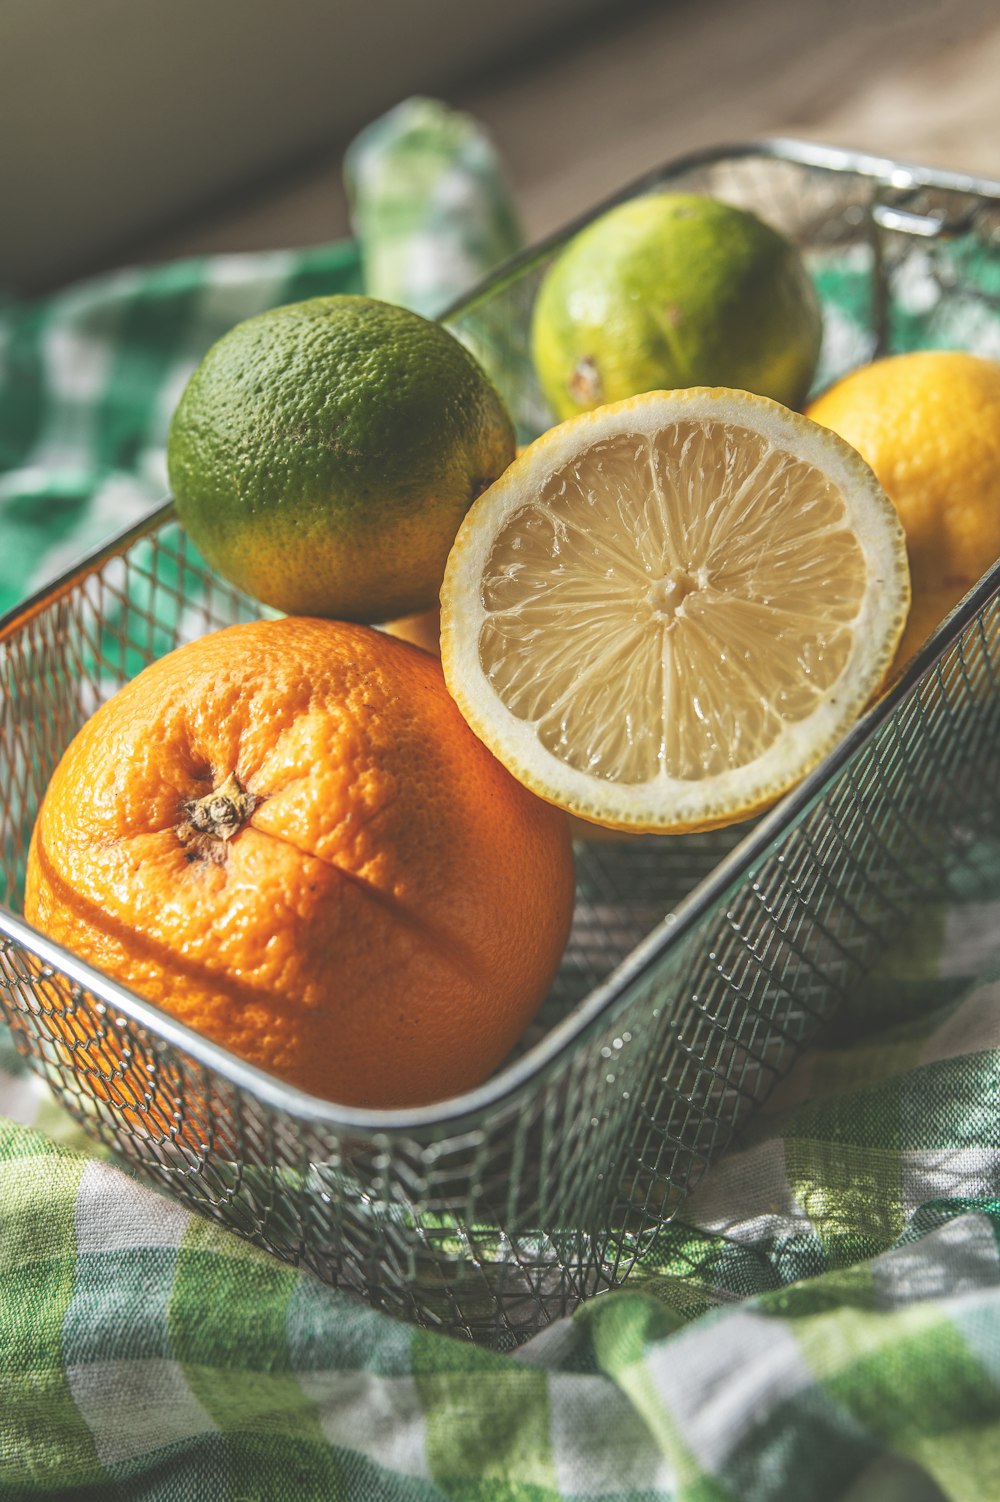 lemons and oranges in basket